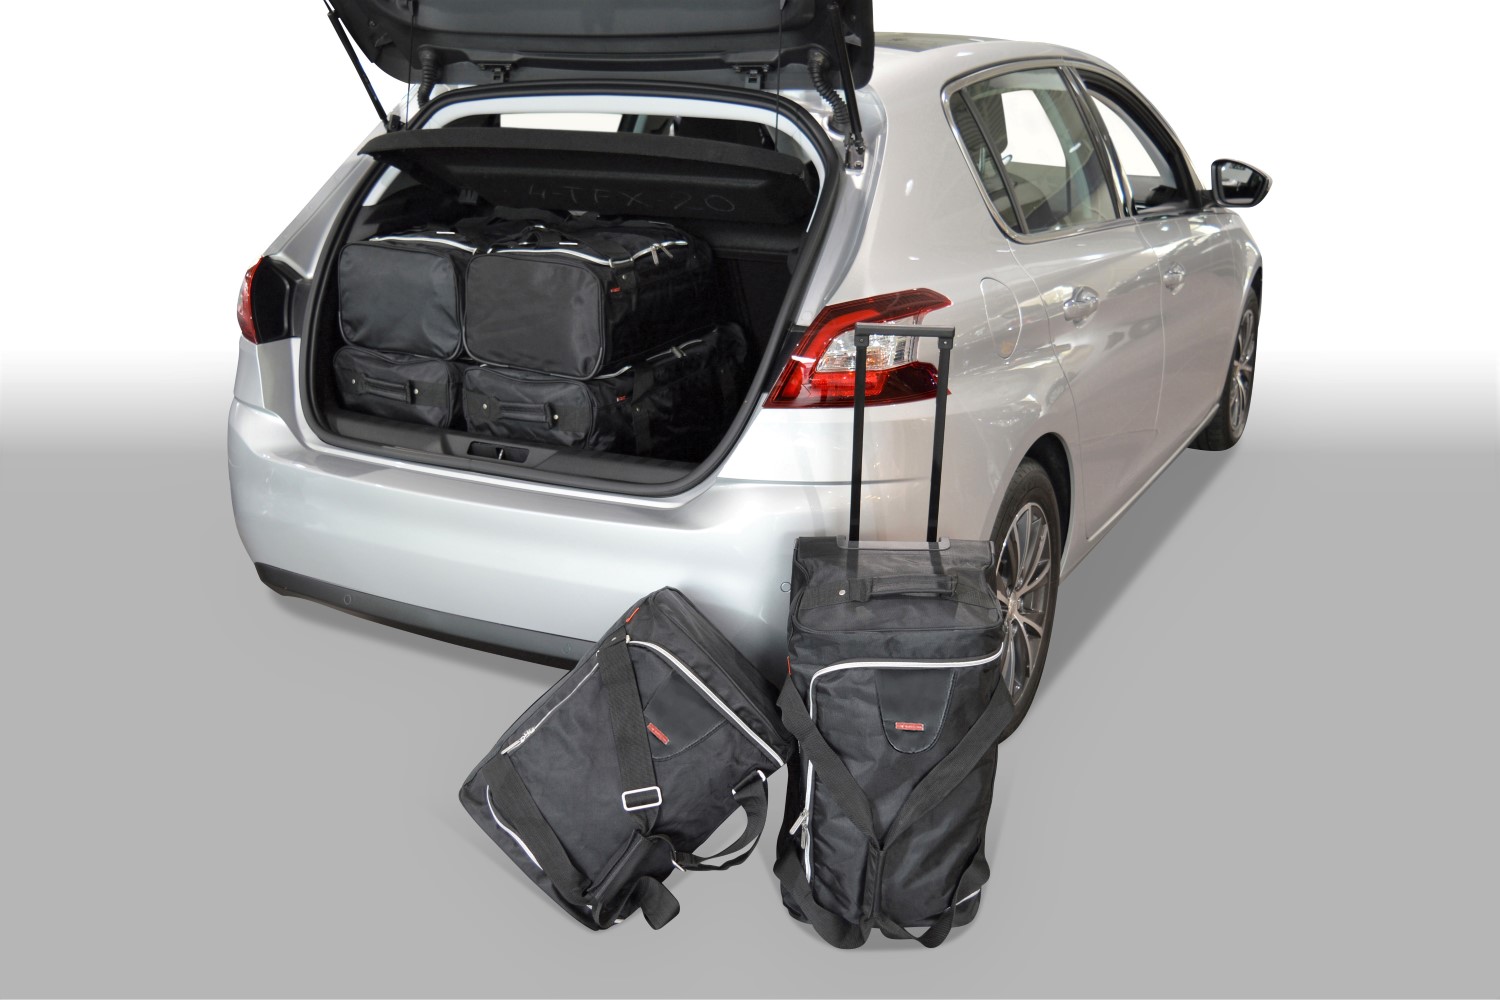 https://www.car-bags.com/images/stories/virtuemart/product/p11101s-peugeot-308-13-car-bags-1.jpg